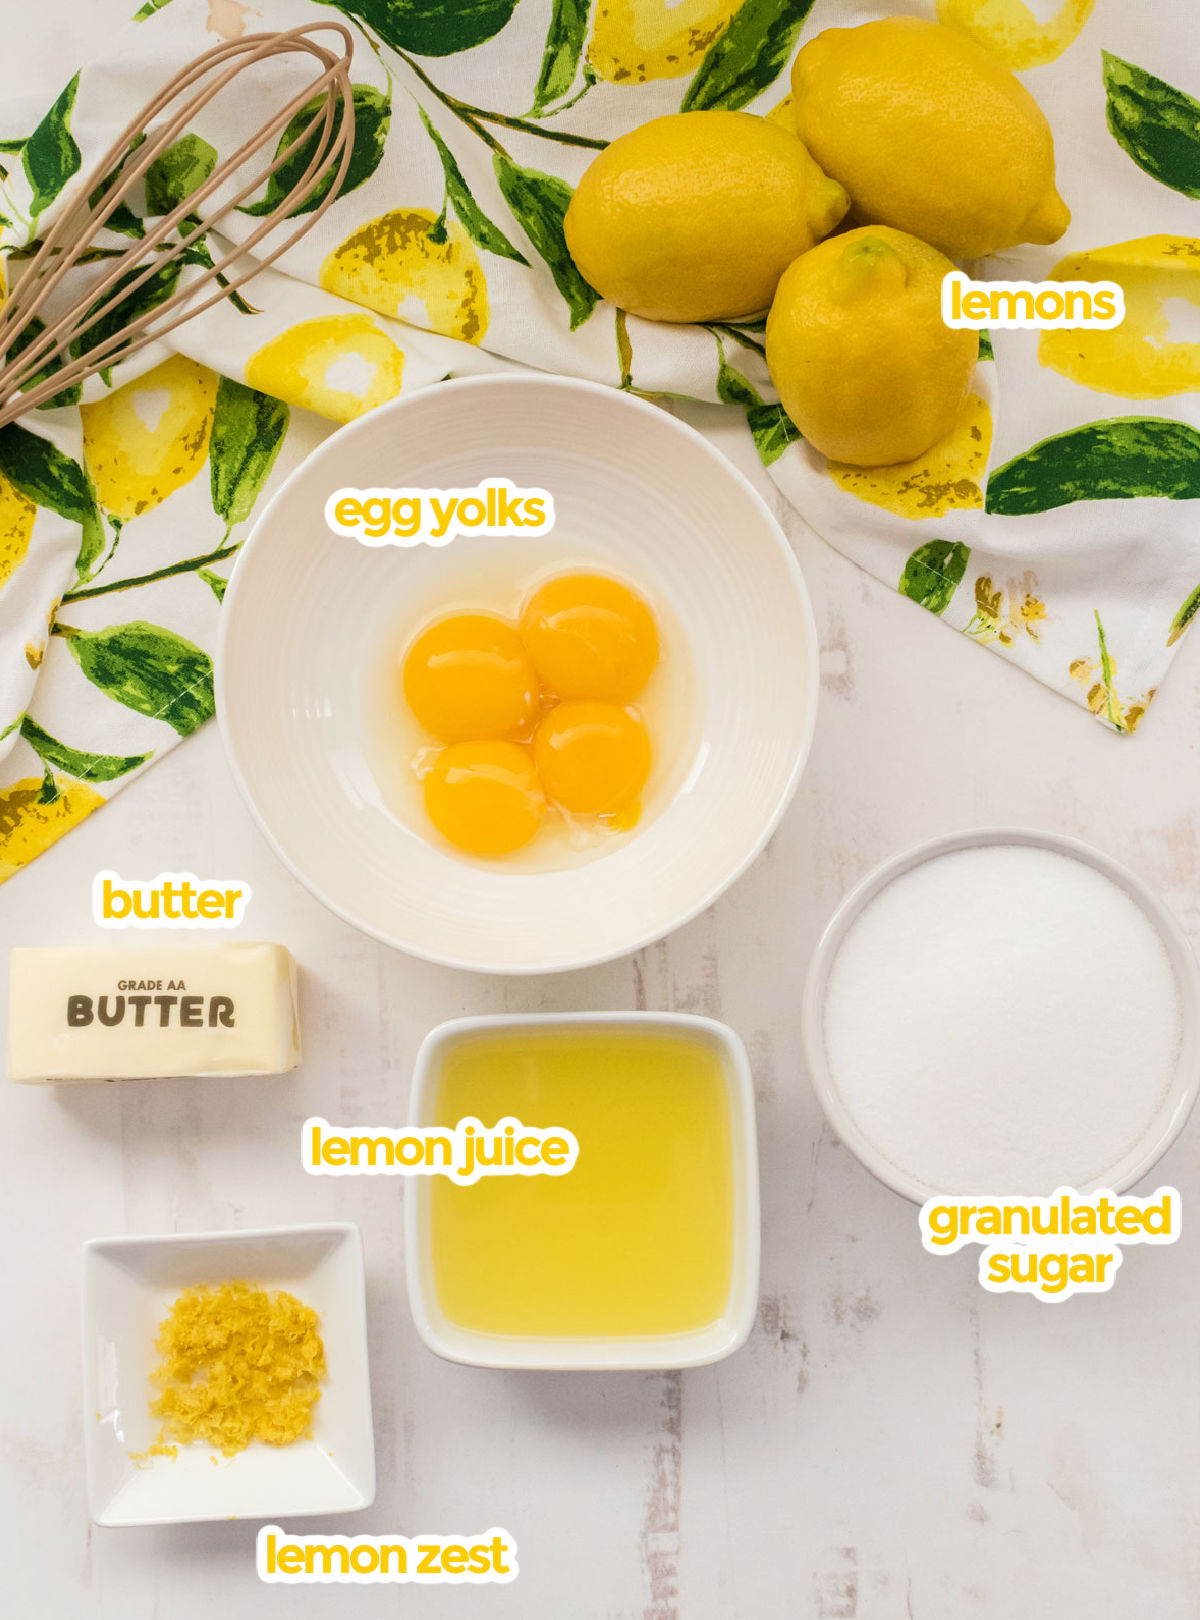 All the ingredients you will need to make our Easy Lemon Curd Recipe including lemons, egg yolks, butter, lemon juice, lemon zest and sugar.